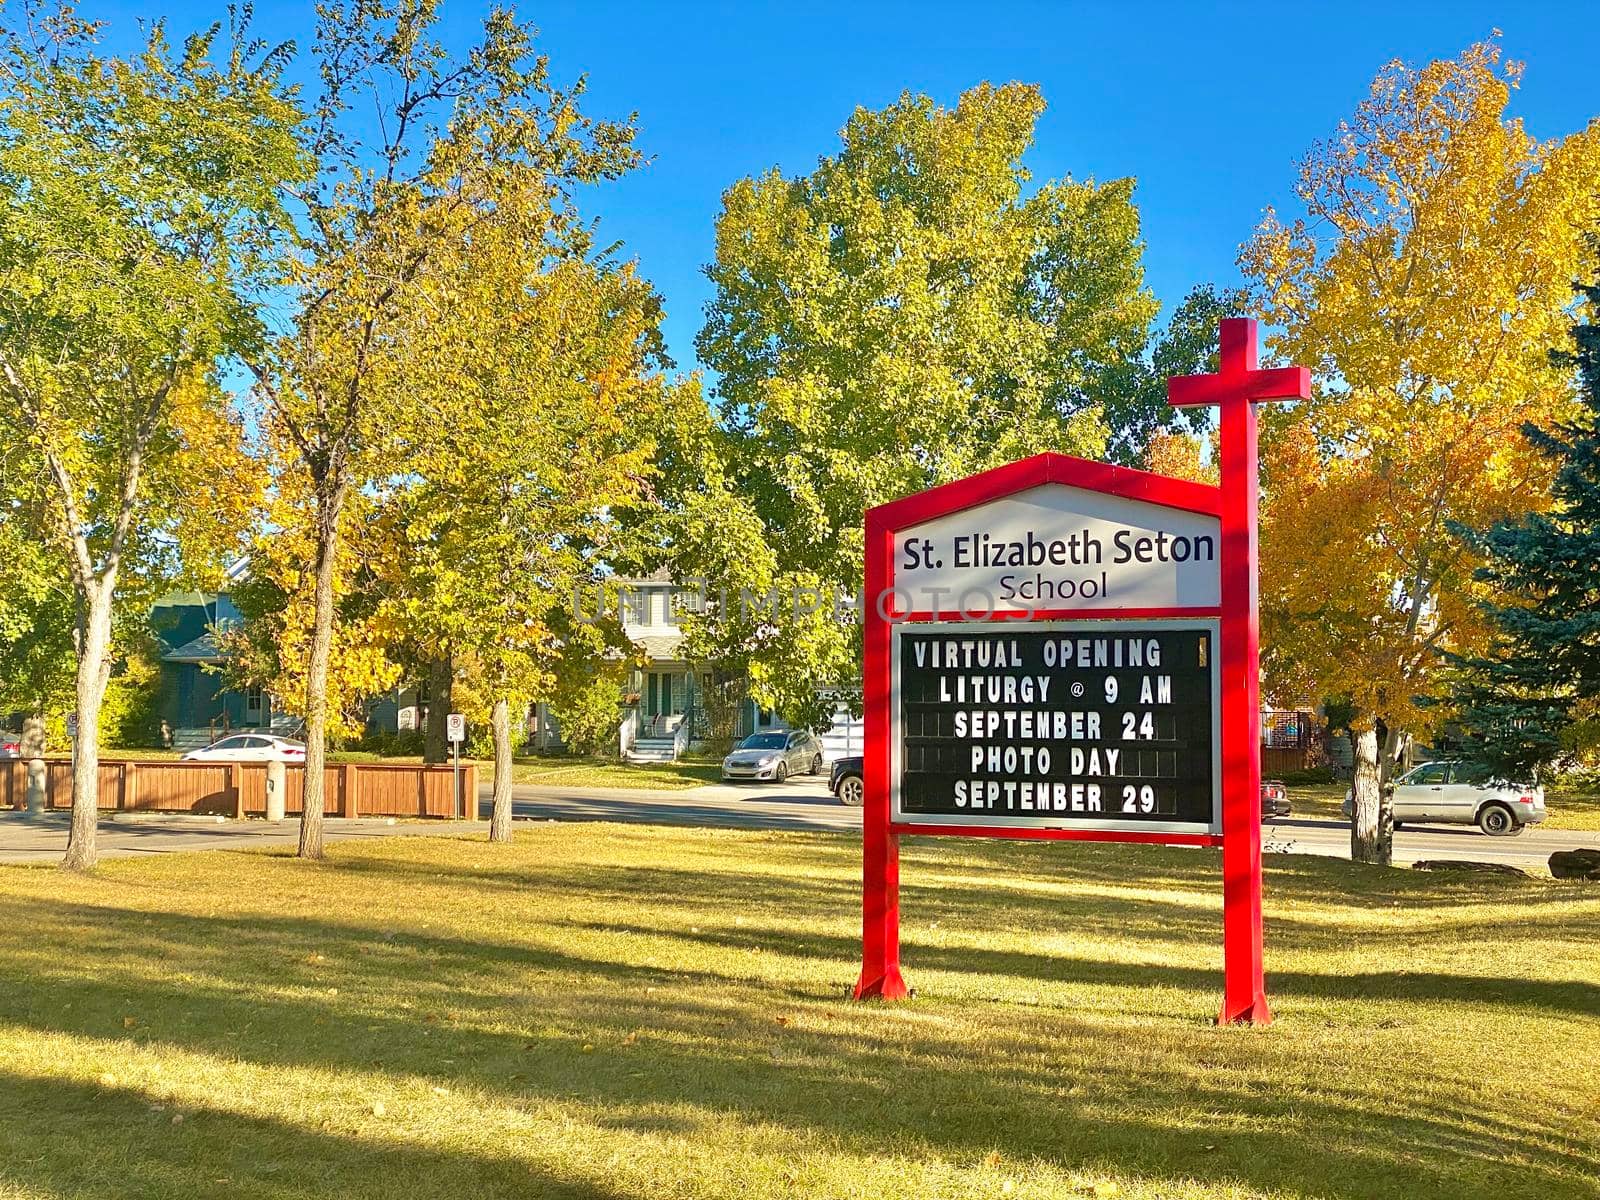 Calgary, Alberta. Canada. Sep 27, 2020. Catholic school sign: St. Elizabeth Seton School. Students during pandemic covid 19, coronavirus. Illustrative by oasisamuel